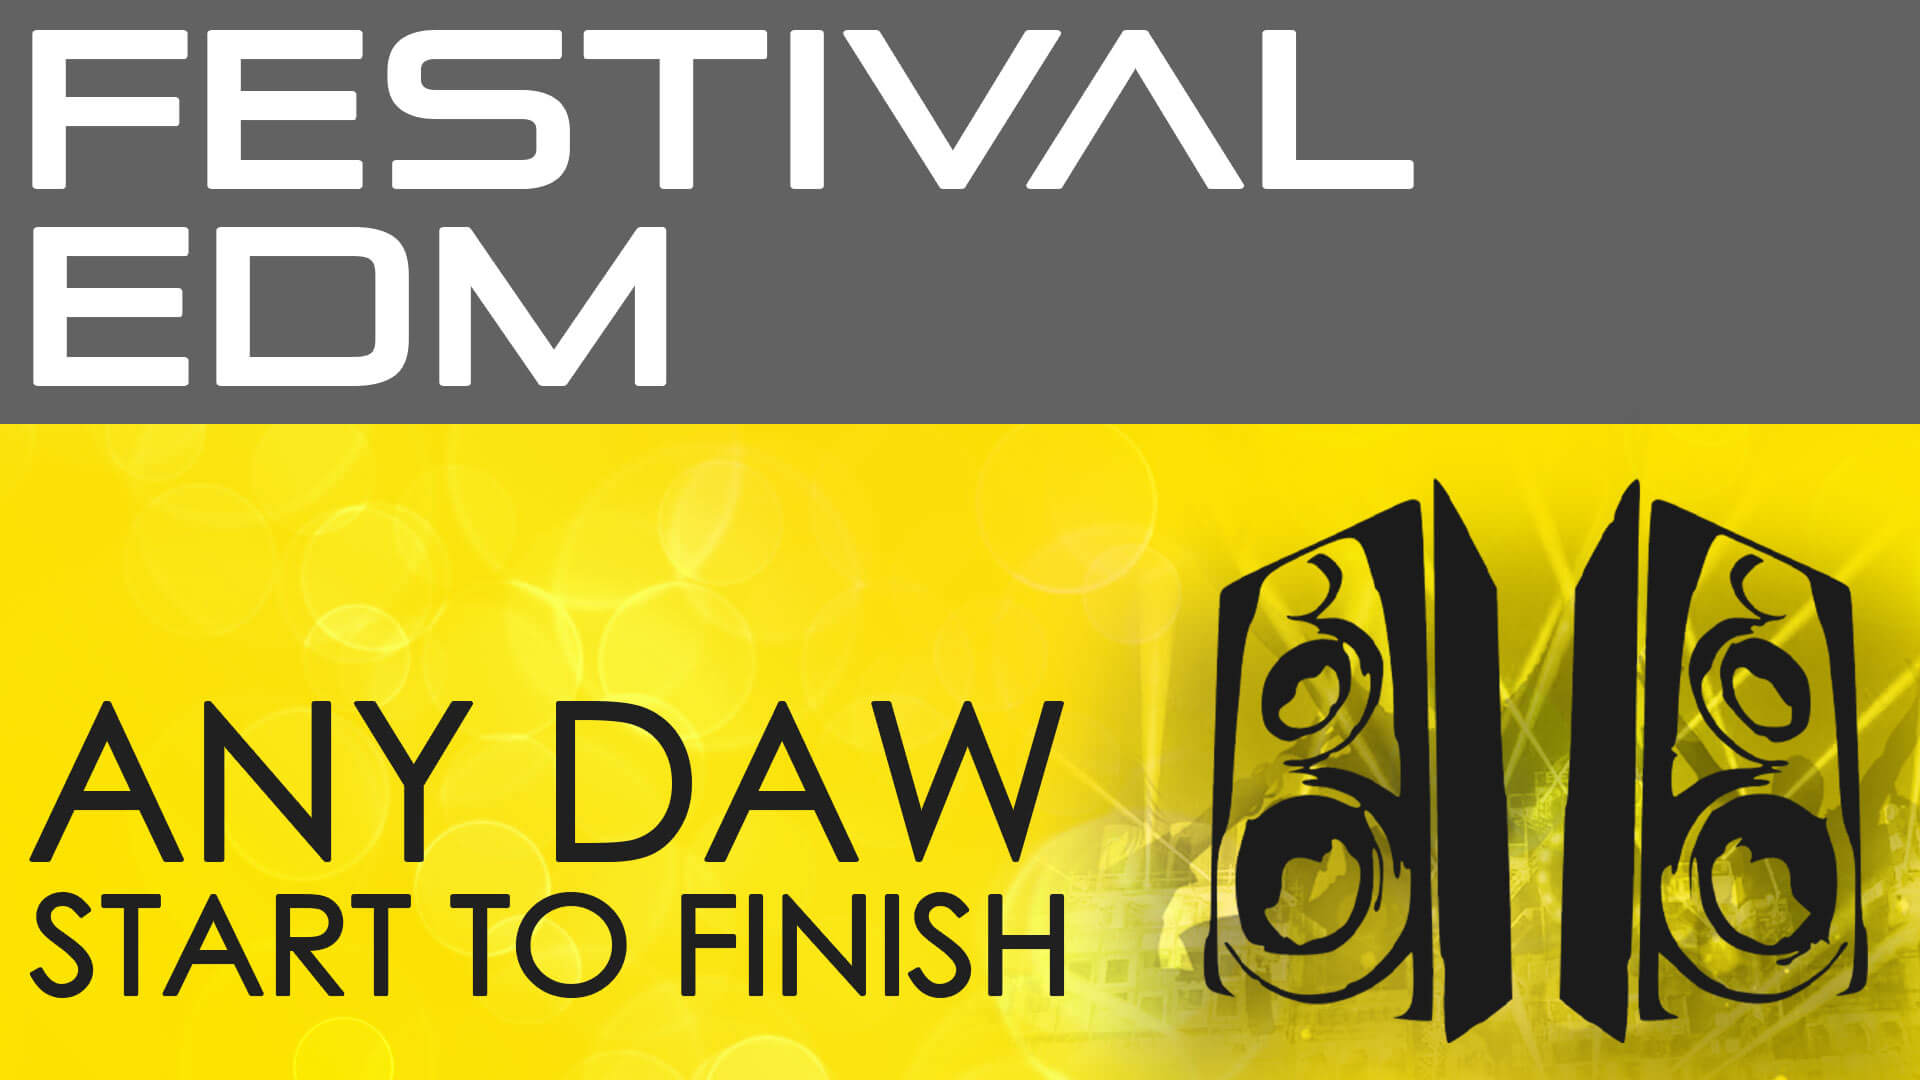 Festival EDM -  Any DAW - Start To Finish